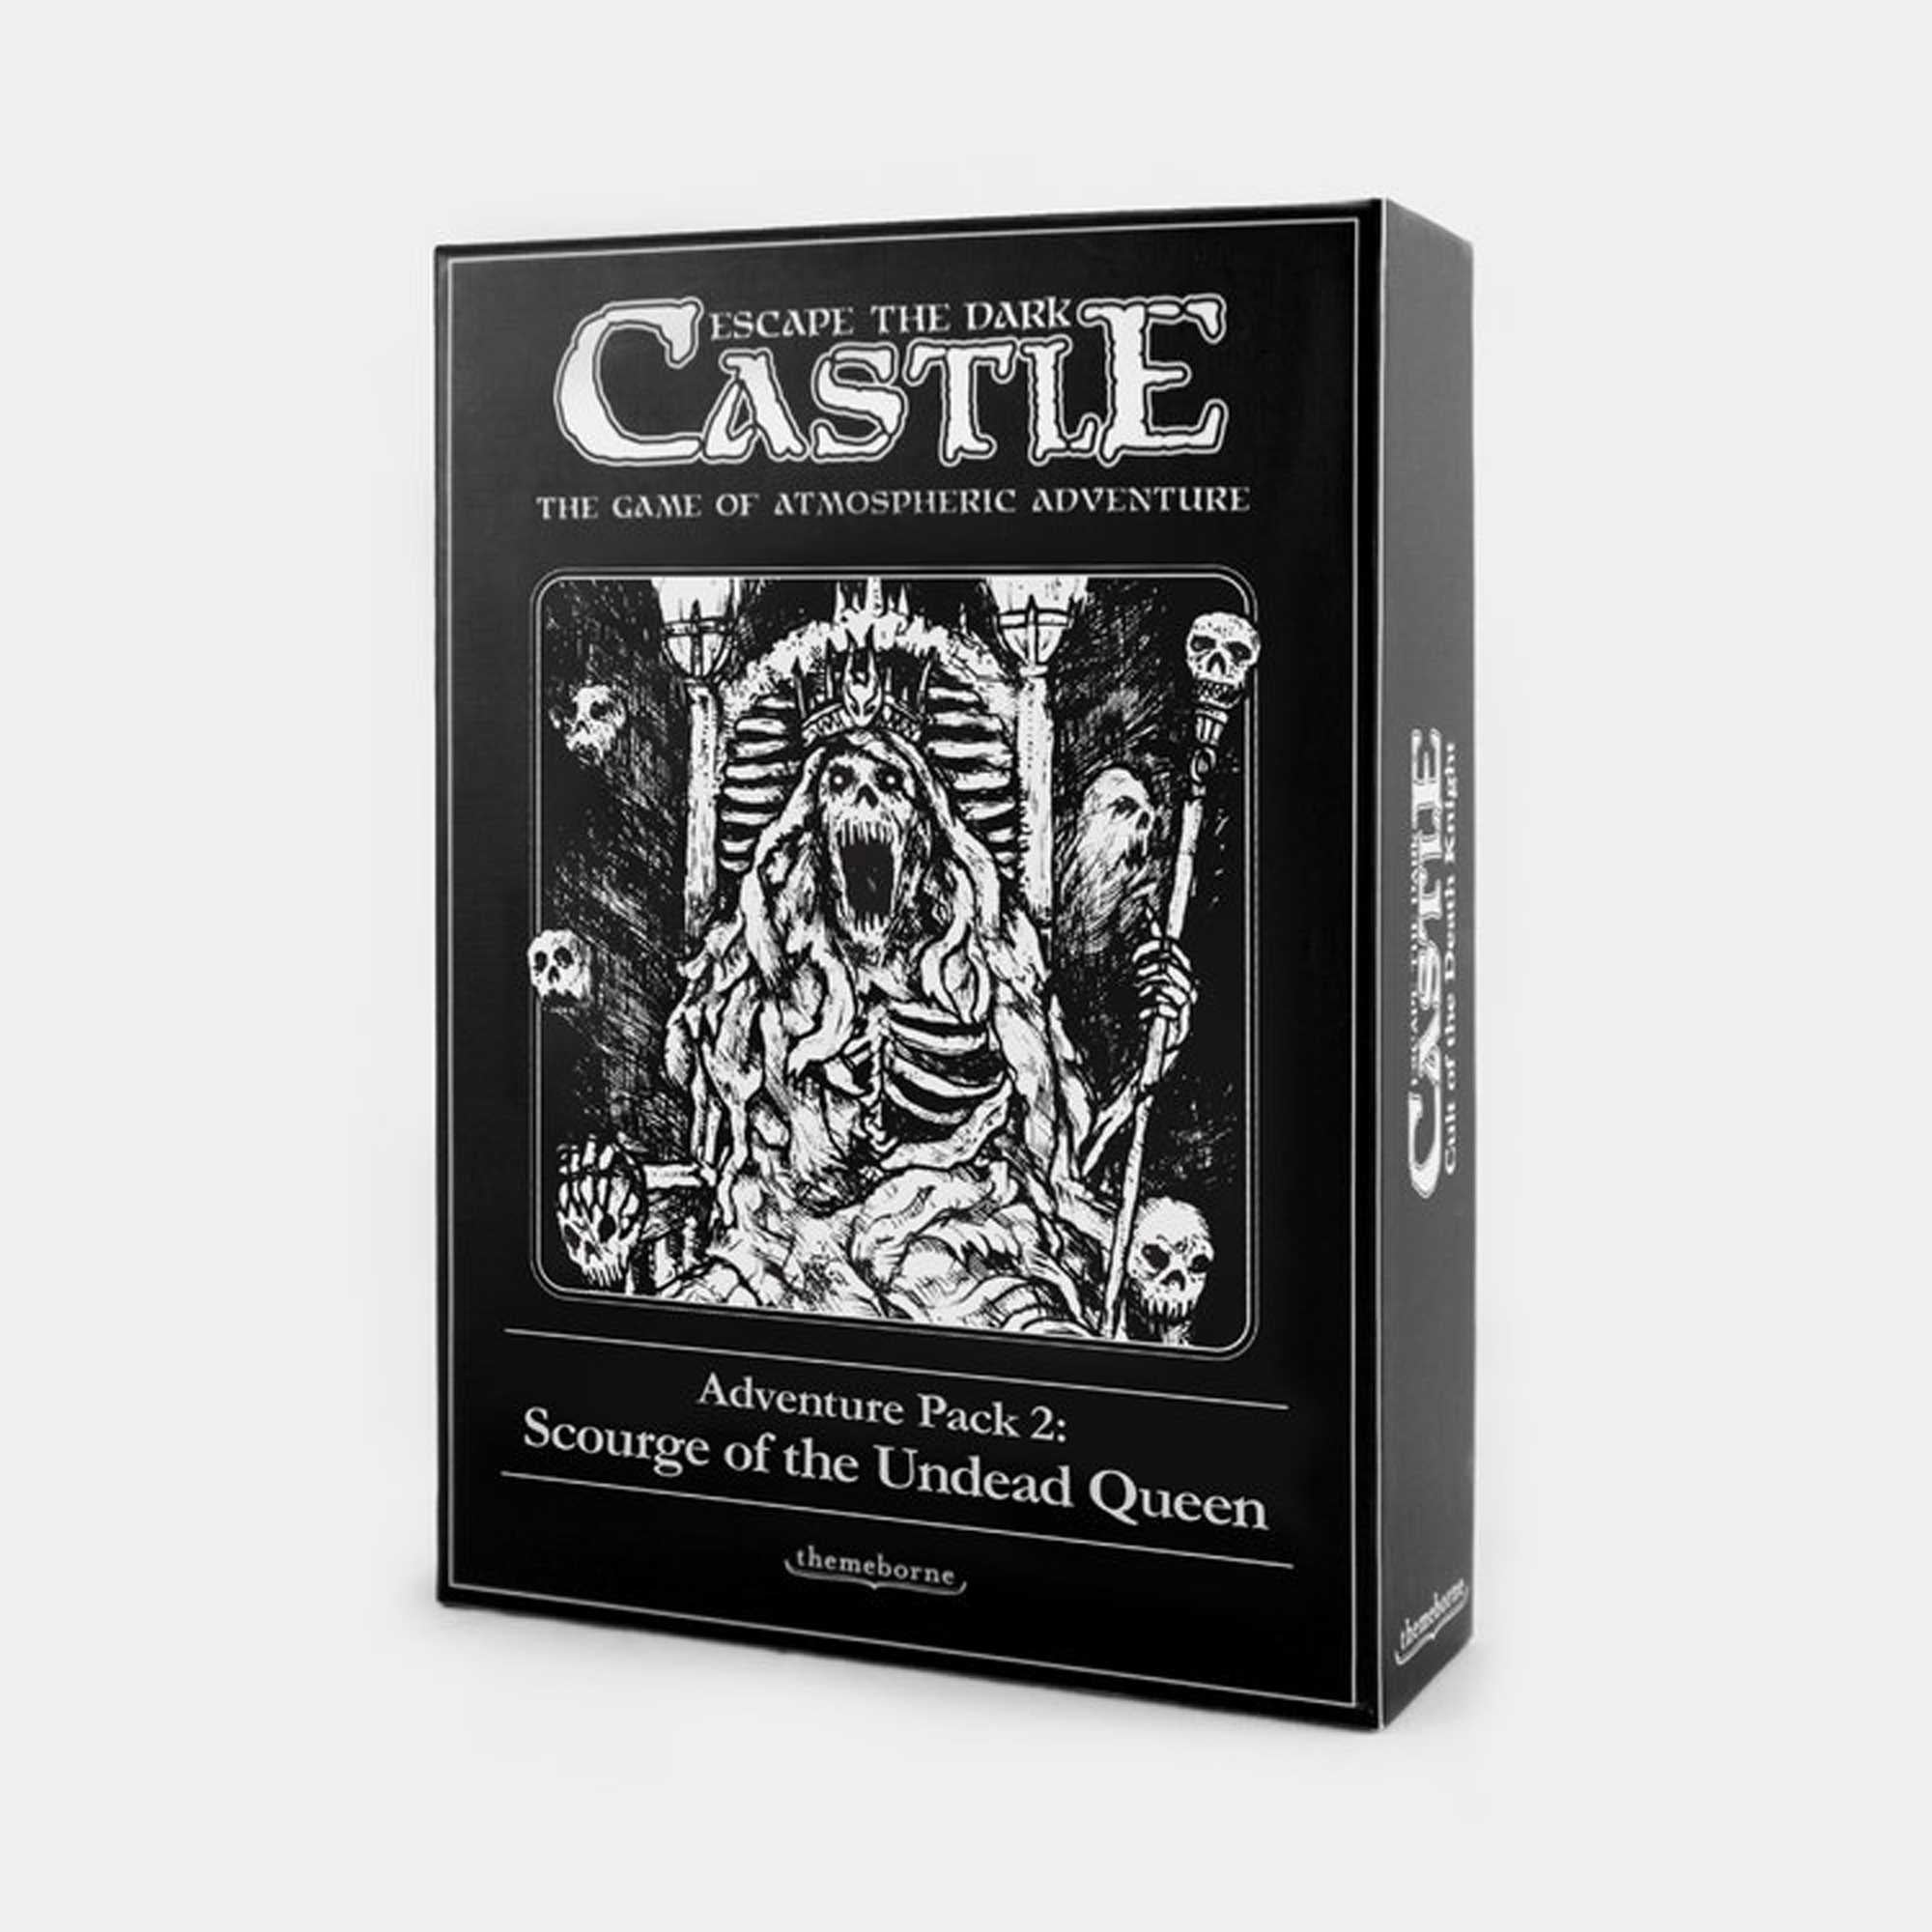 Themeborne Ltd. Escape the Dark Castle: Adventure Pack 2 - Scourge of the Undead Queen